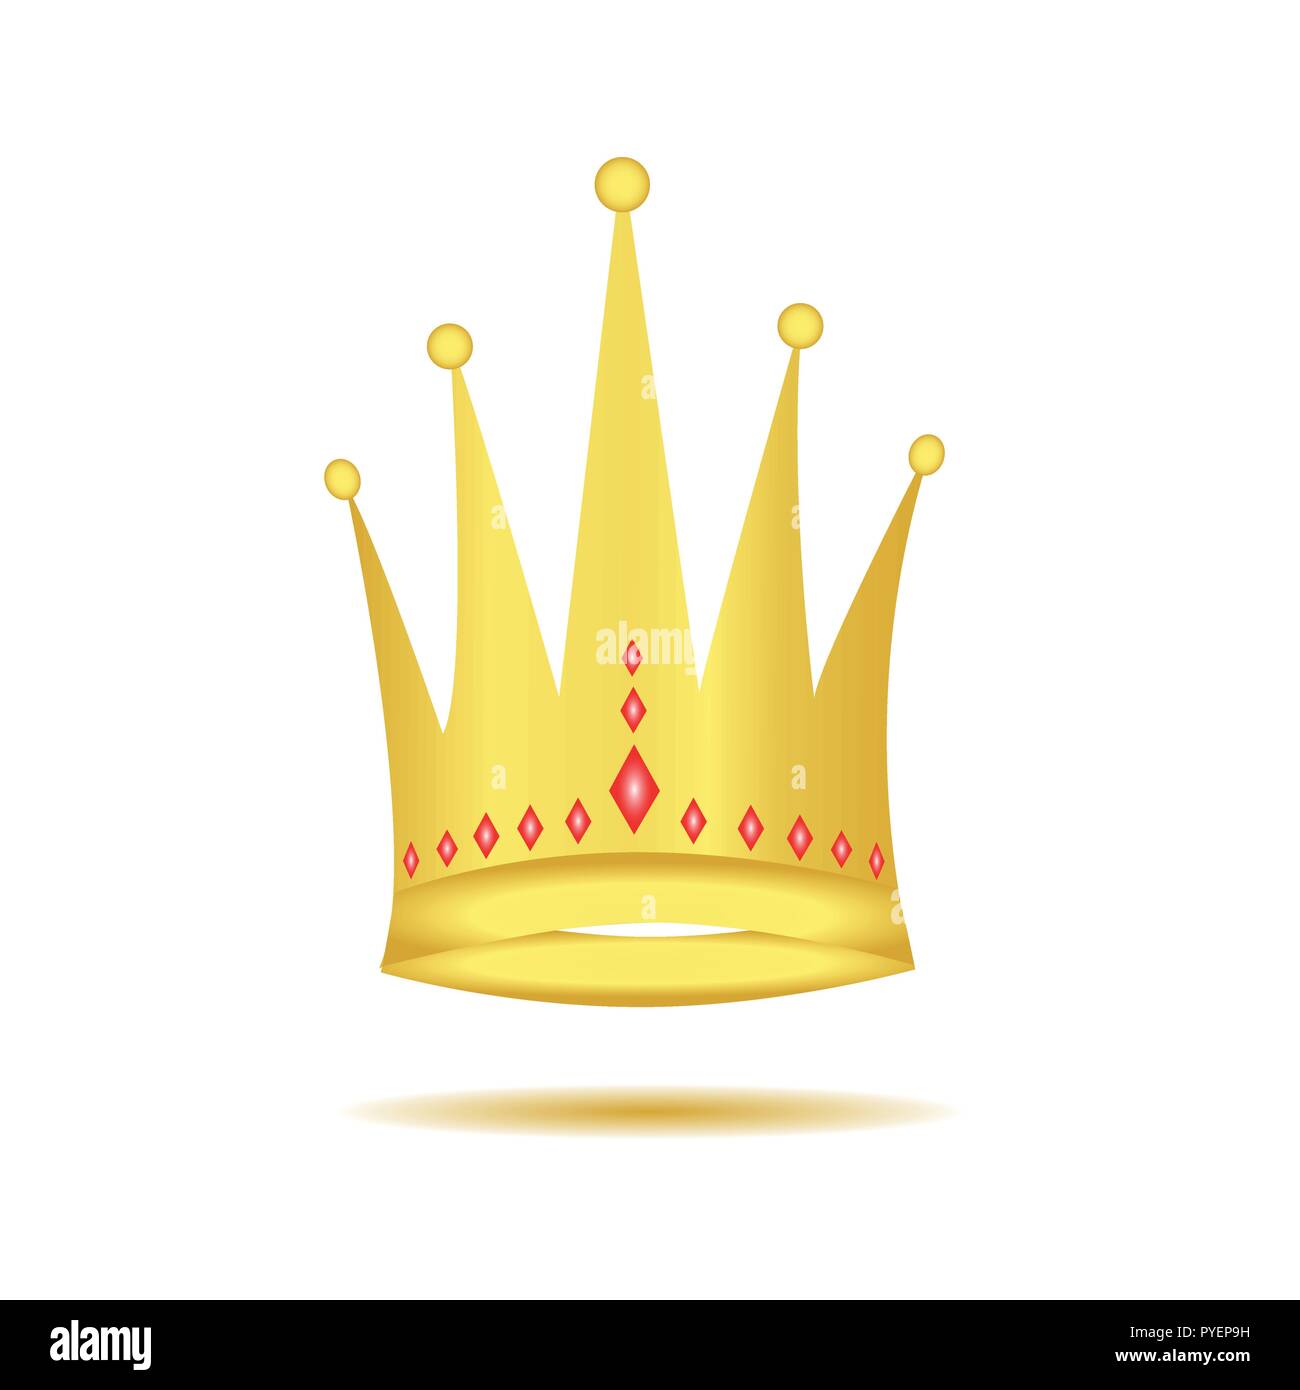 golden crown with diamonds vector illustration EPS10 Stock Vector